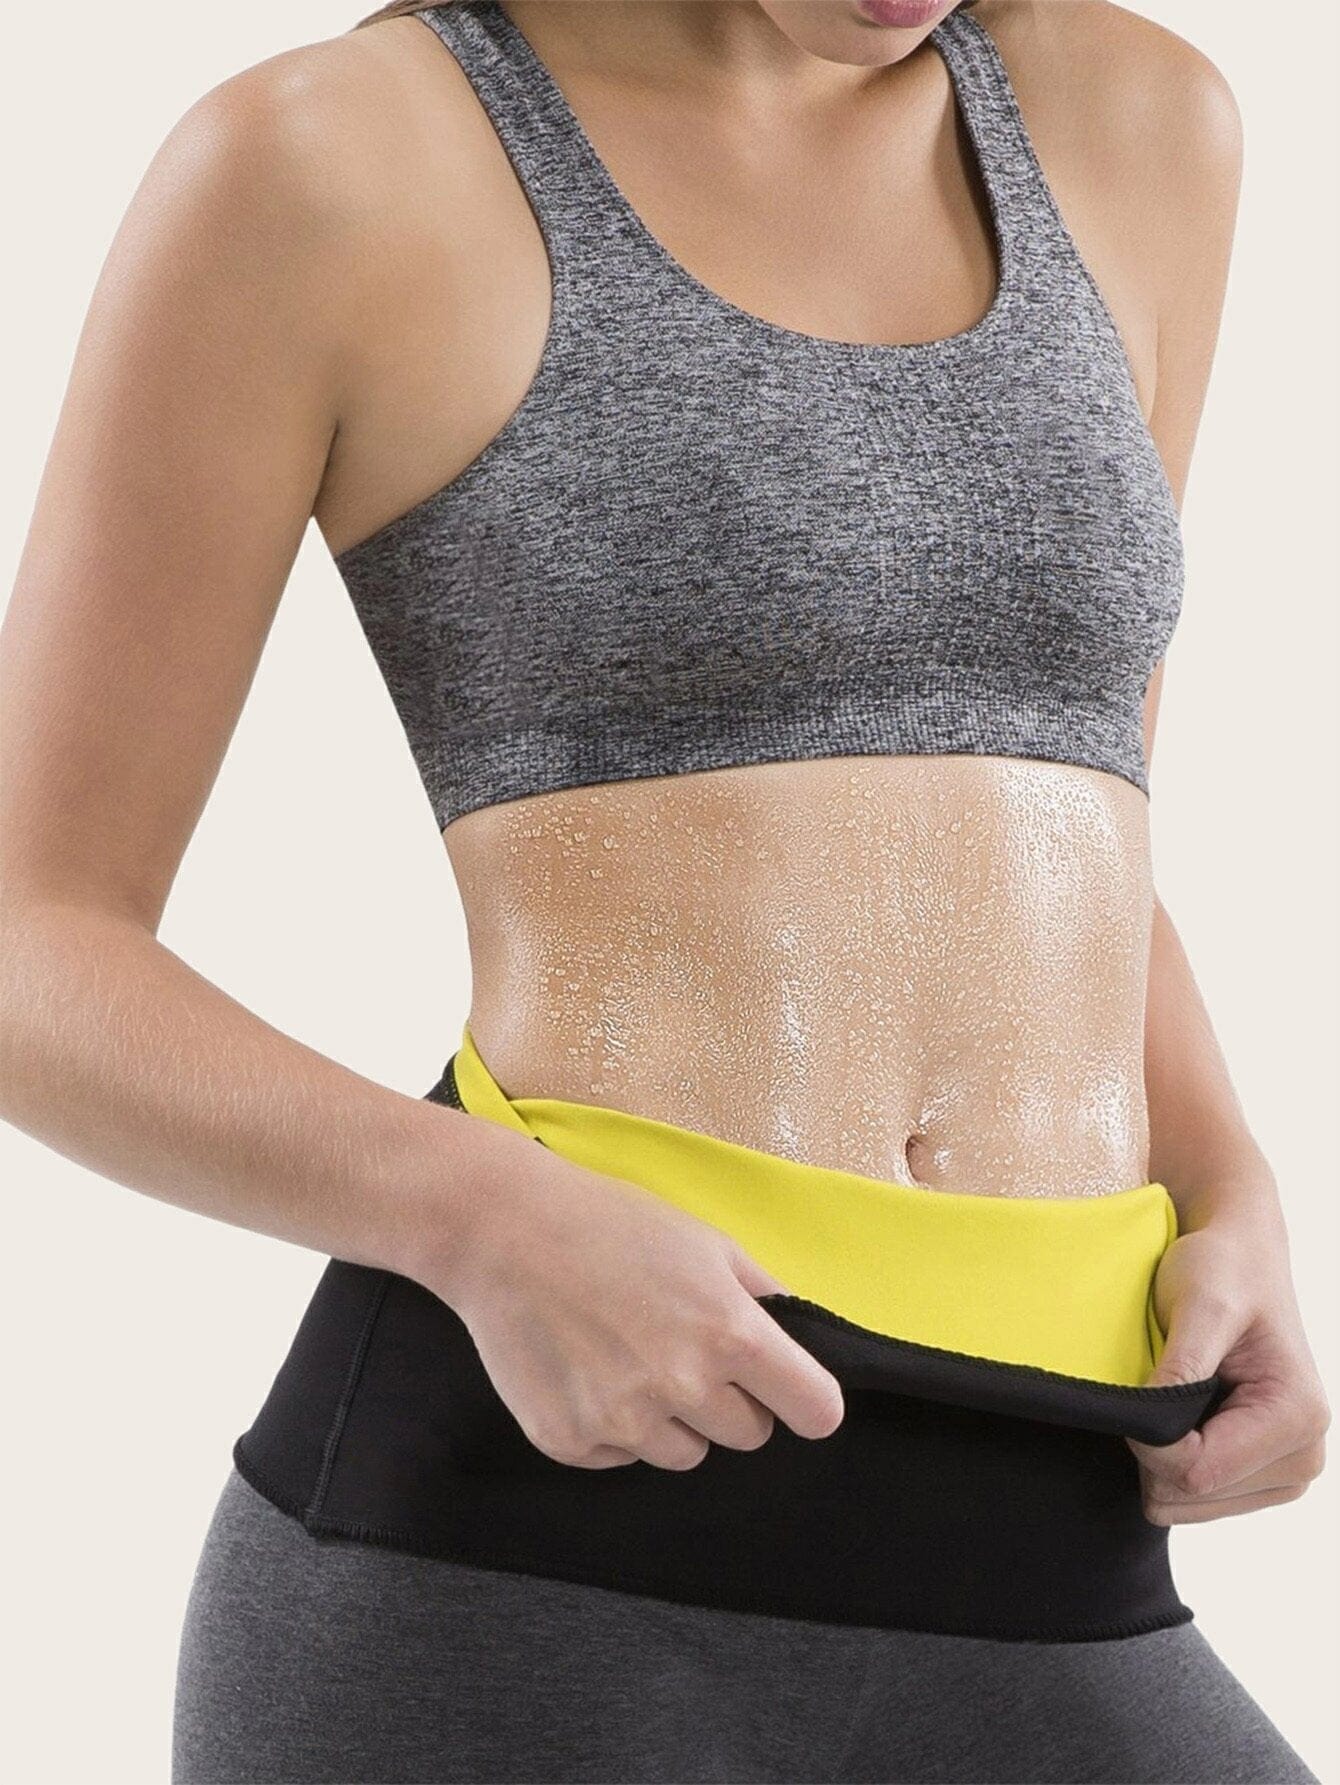 Body Shaper Manual Gym Sweat Slimming Belt, Waist Size: 46X9 Inch